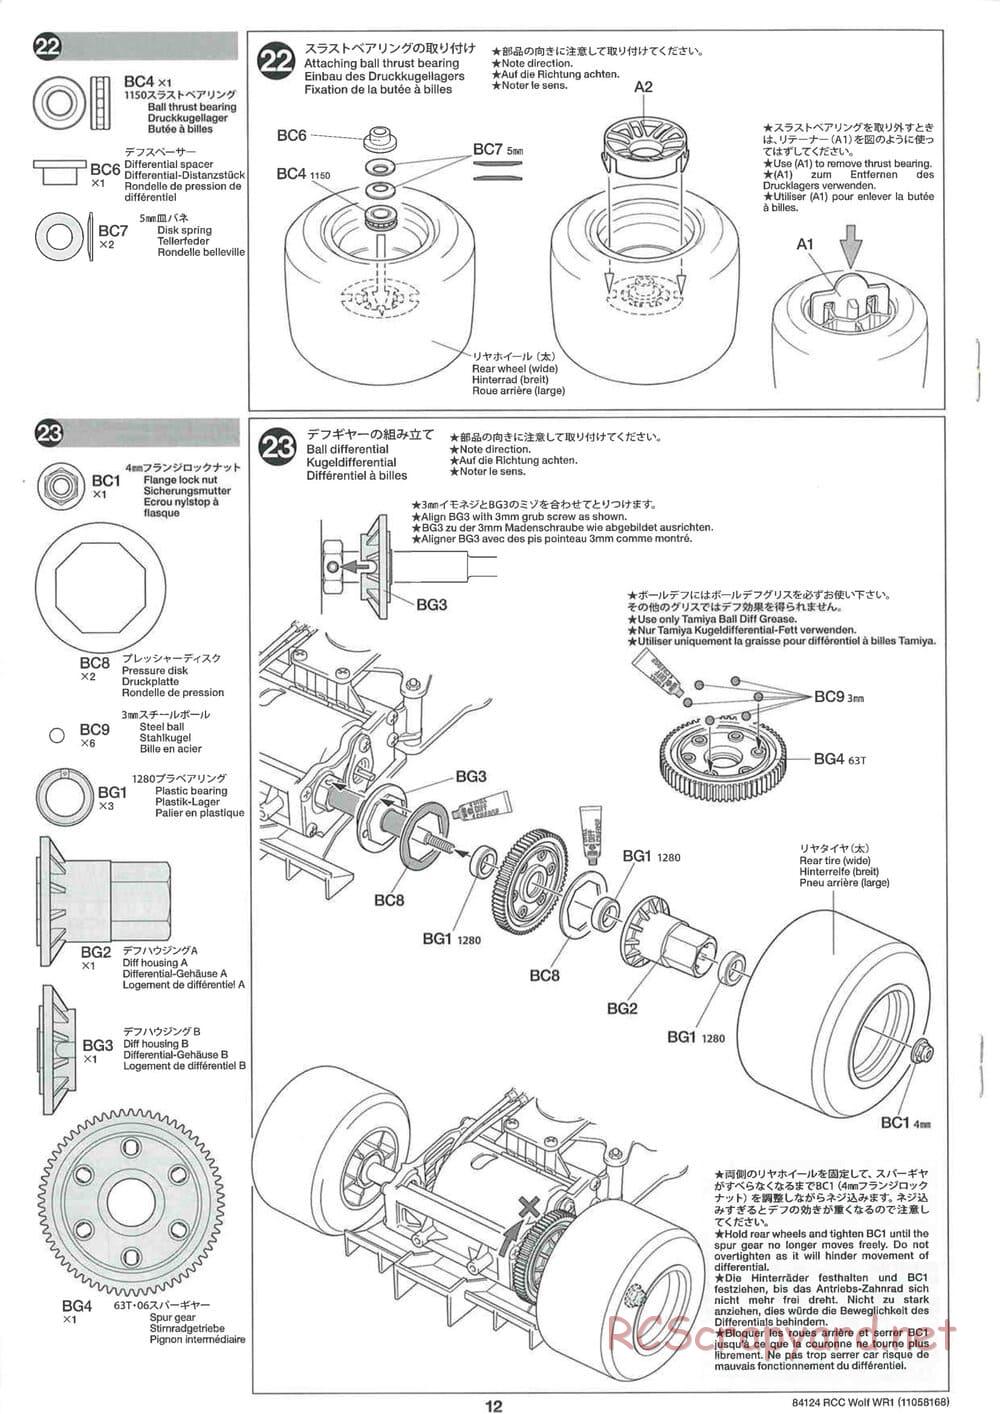 Tamiya - Wolf WR1 - F104W Chassis - Manual - Page 12